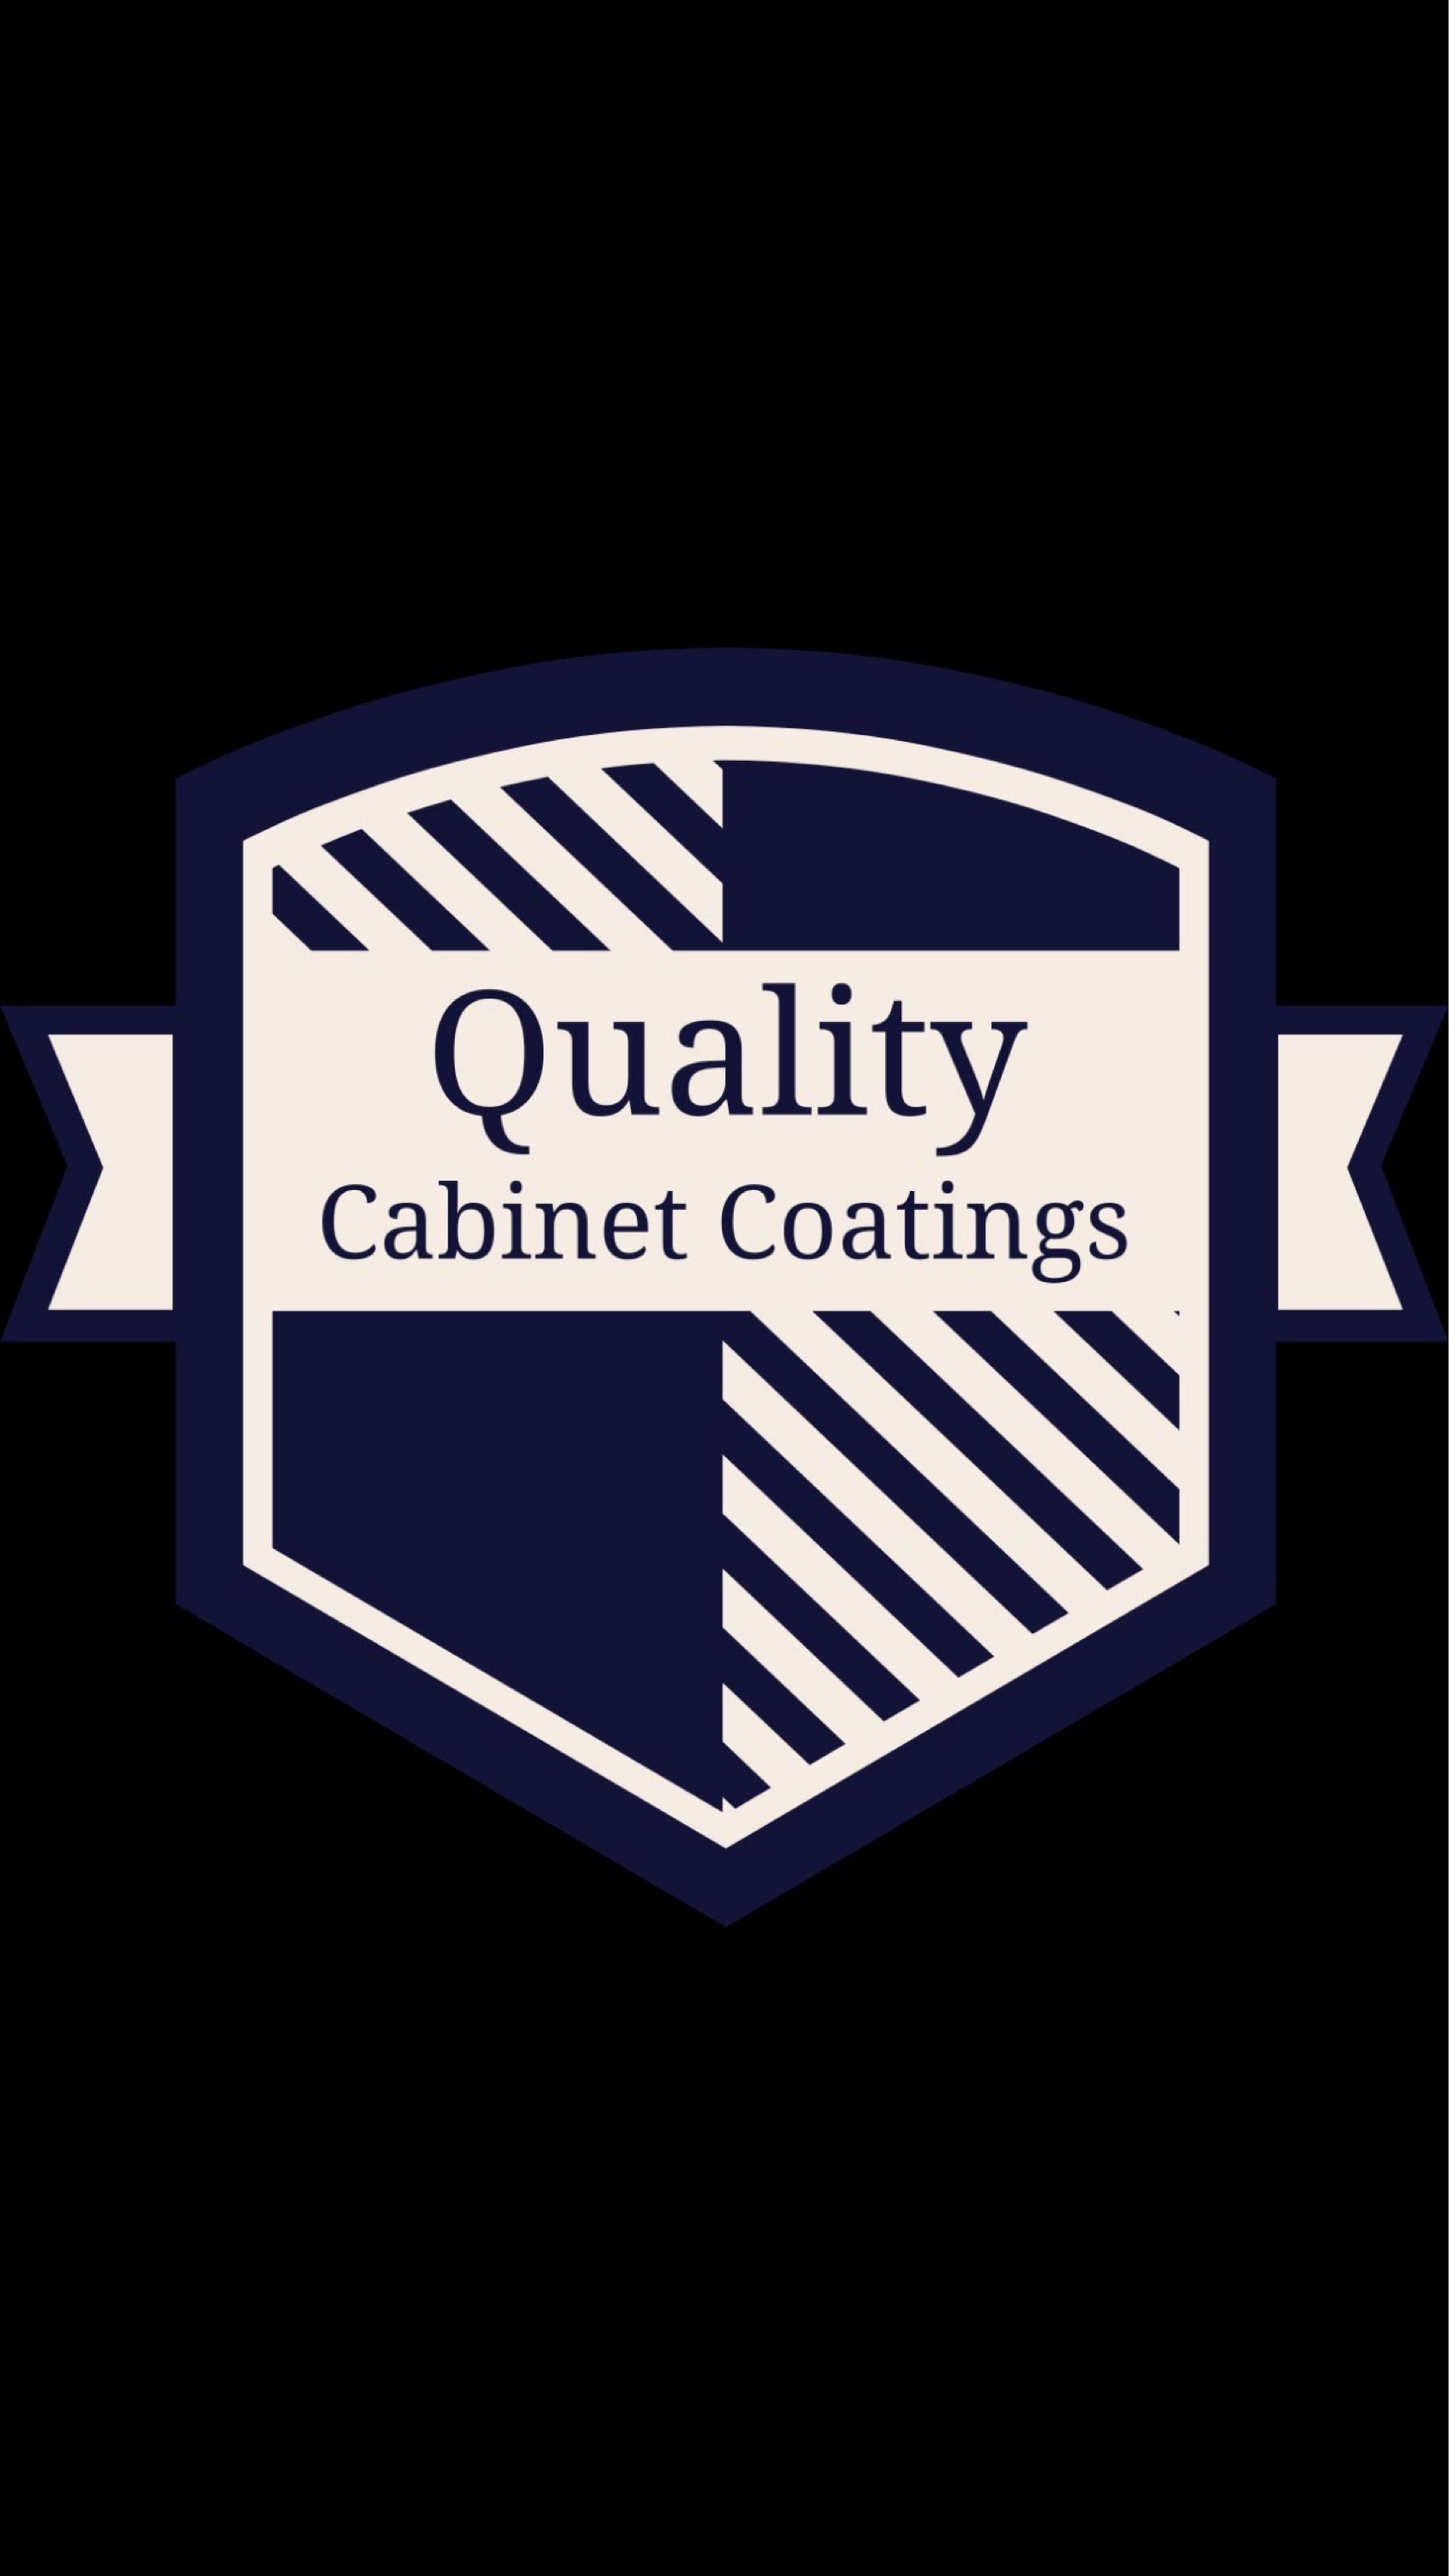 Quality Cabinet Coatings Logo